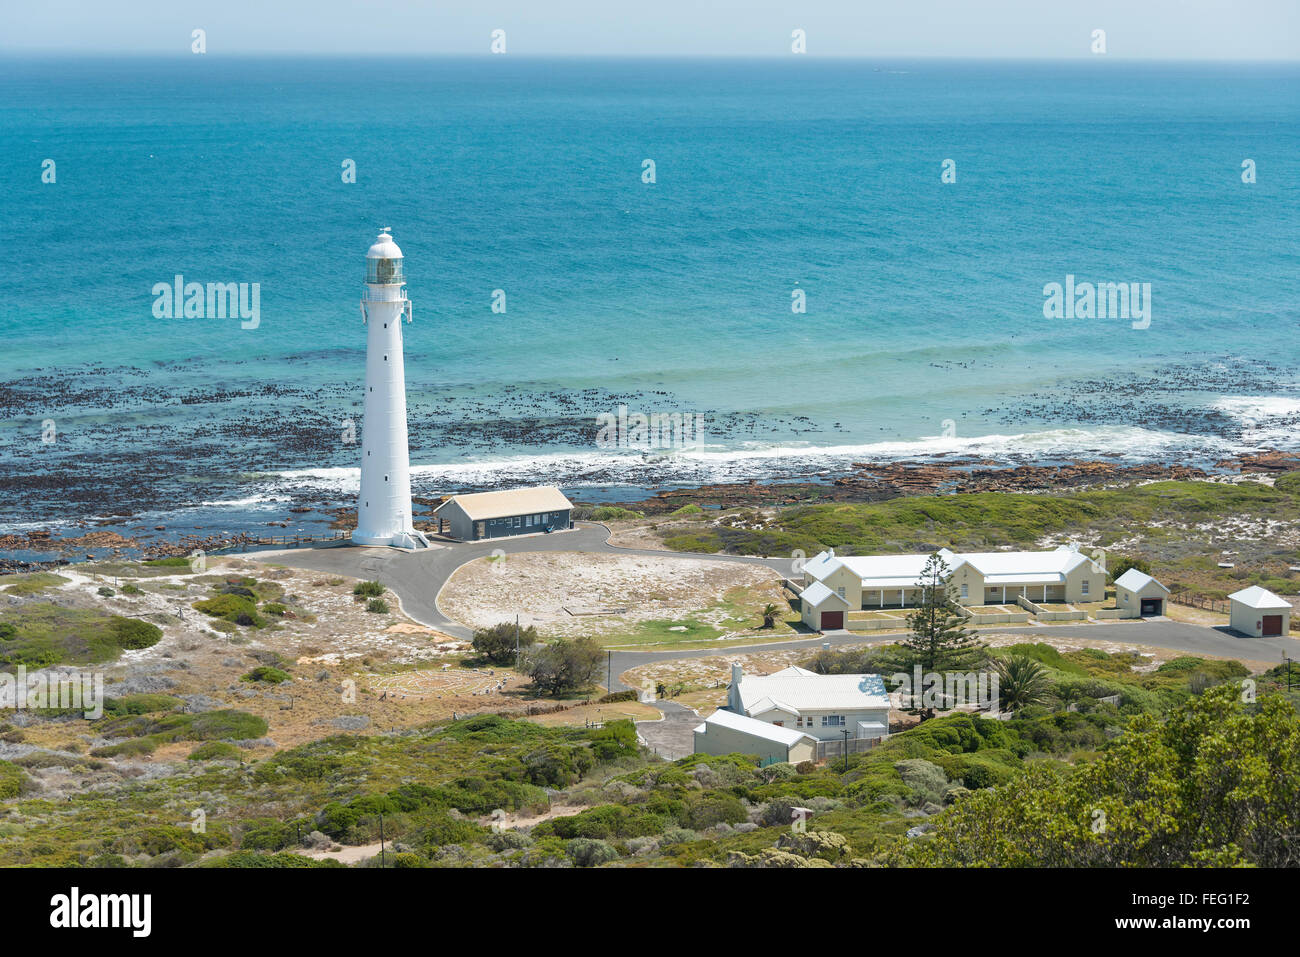 Slangkoppunt Lighthouse, Kommetjie, Cape Peninsula, Western Cape Province, South Africa Stock Photo